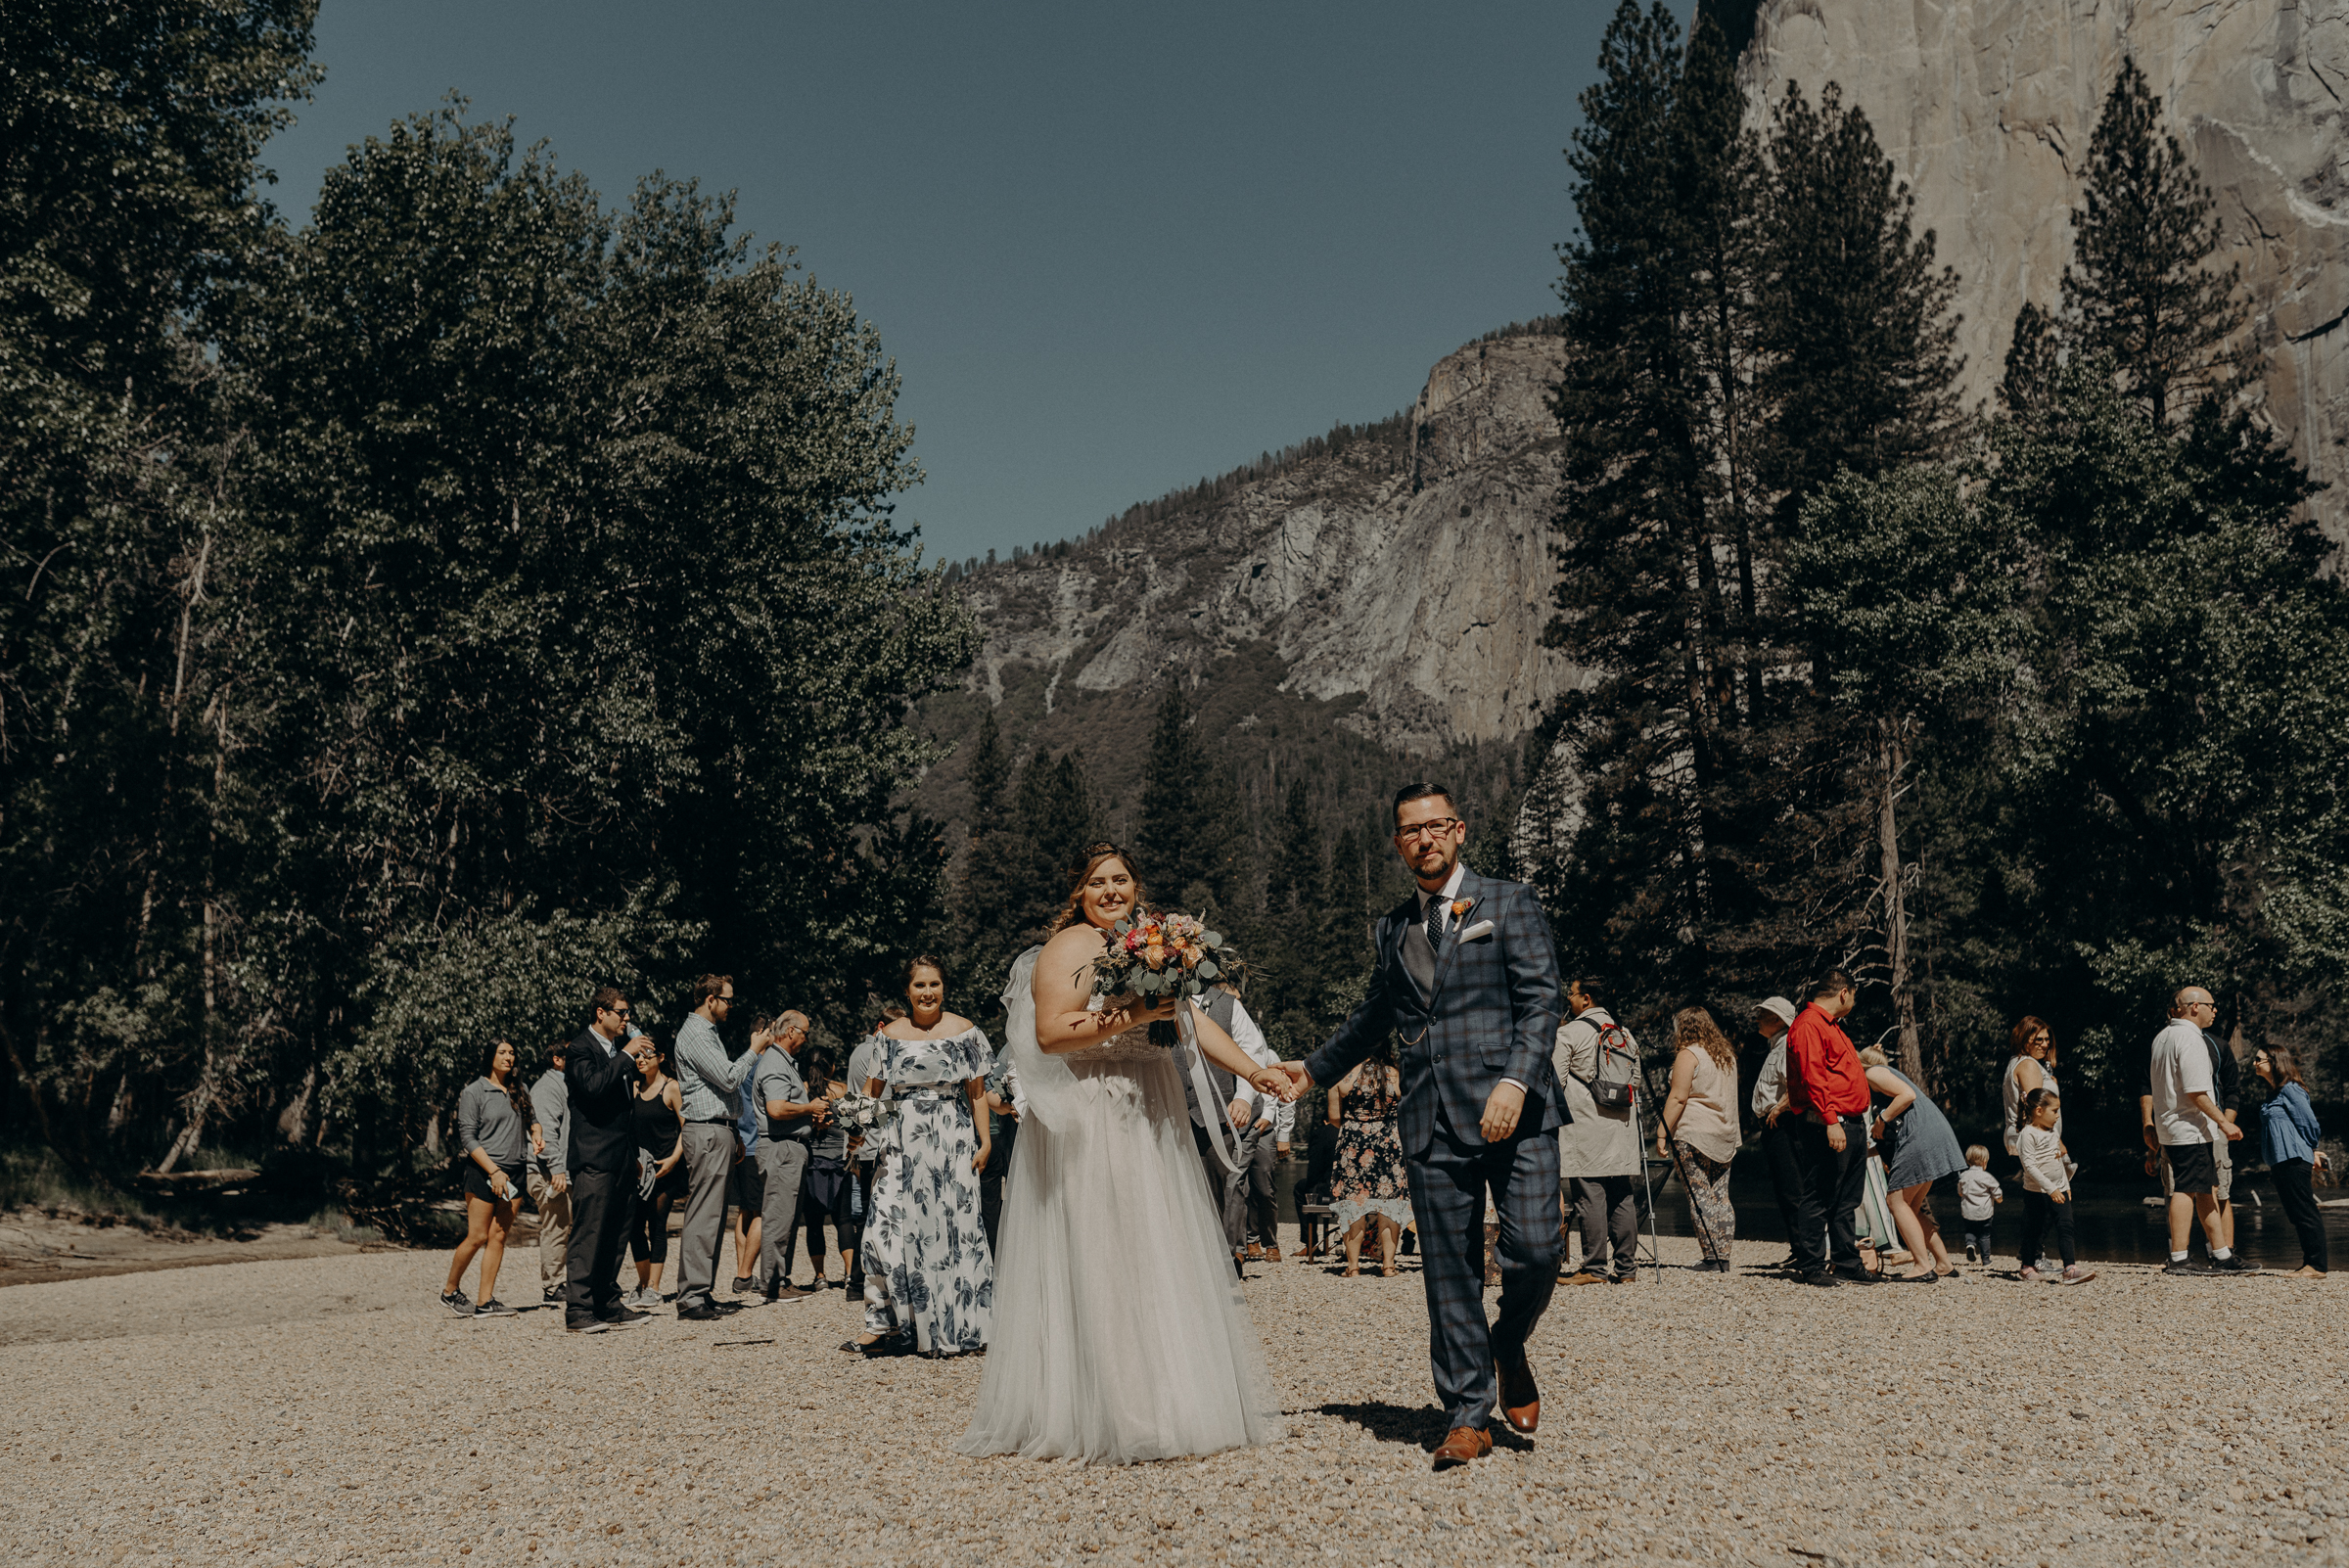 Los Angeles Wedding Photographers - Yosemite Destination Wedding Elopement - IsaiahAndTaylor.com -064.jpg